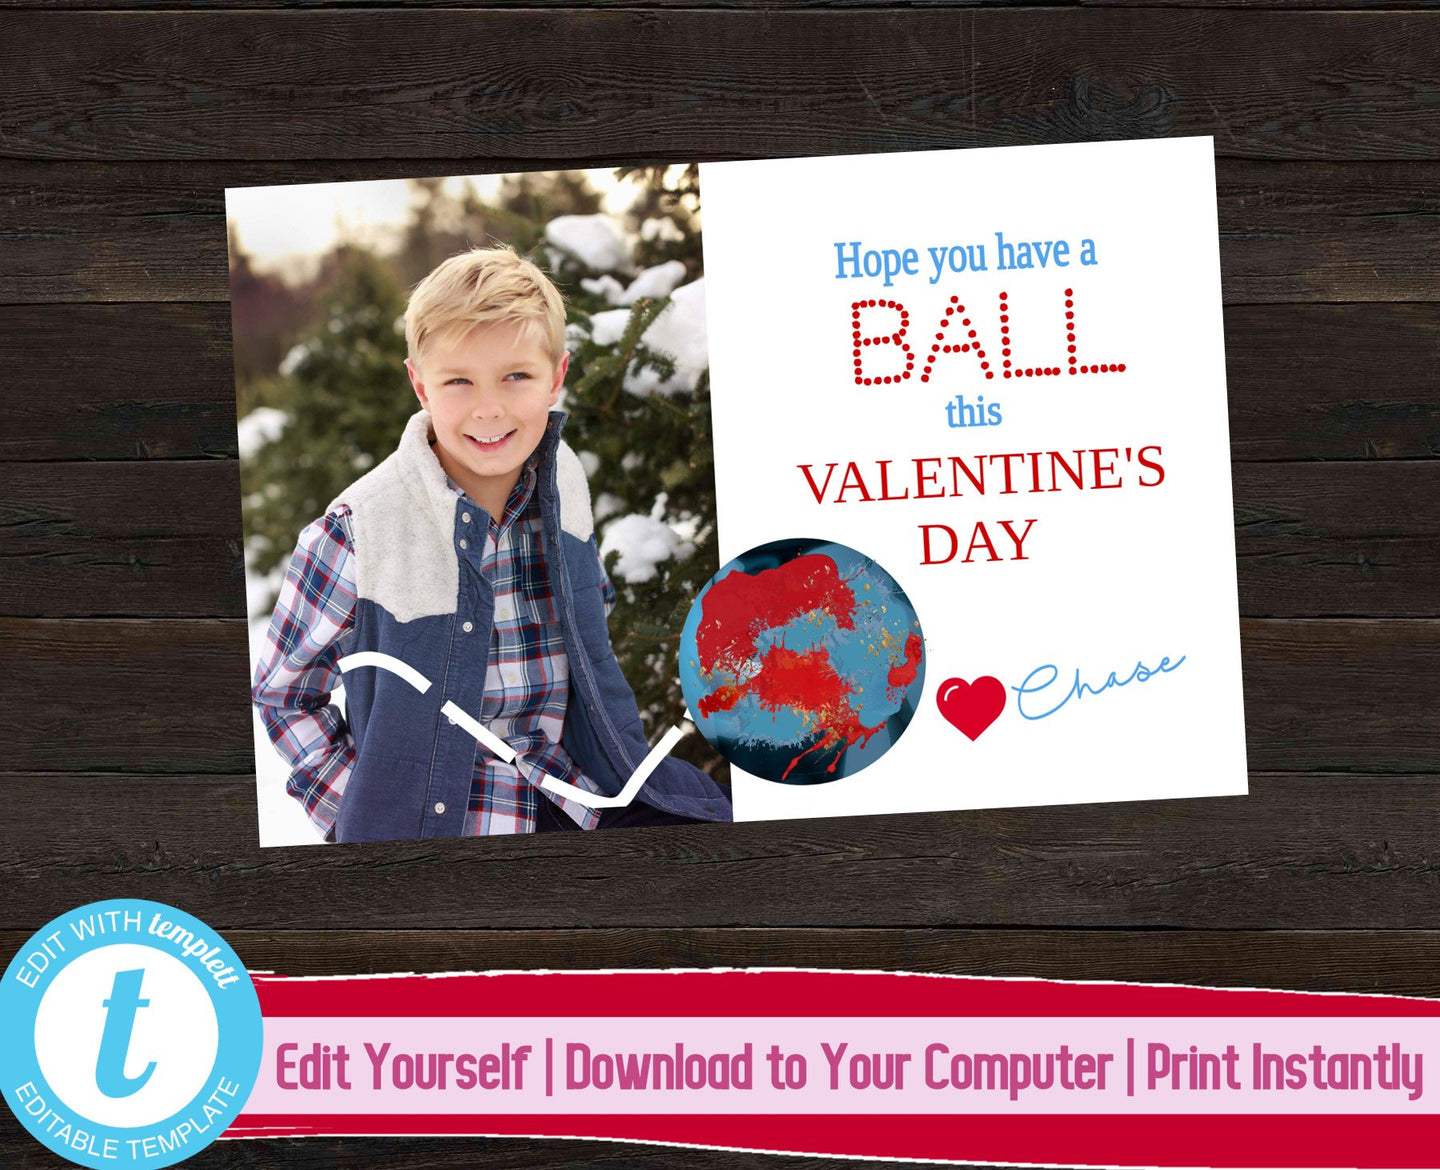 Custom Photo Valentine, Bouncy Ball Valentine's Day Card with Photo, Kids Valentines Day Card, Hope You Have a Ball, Printable Template